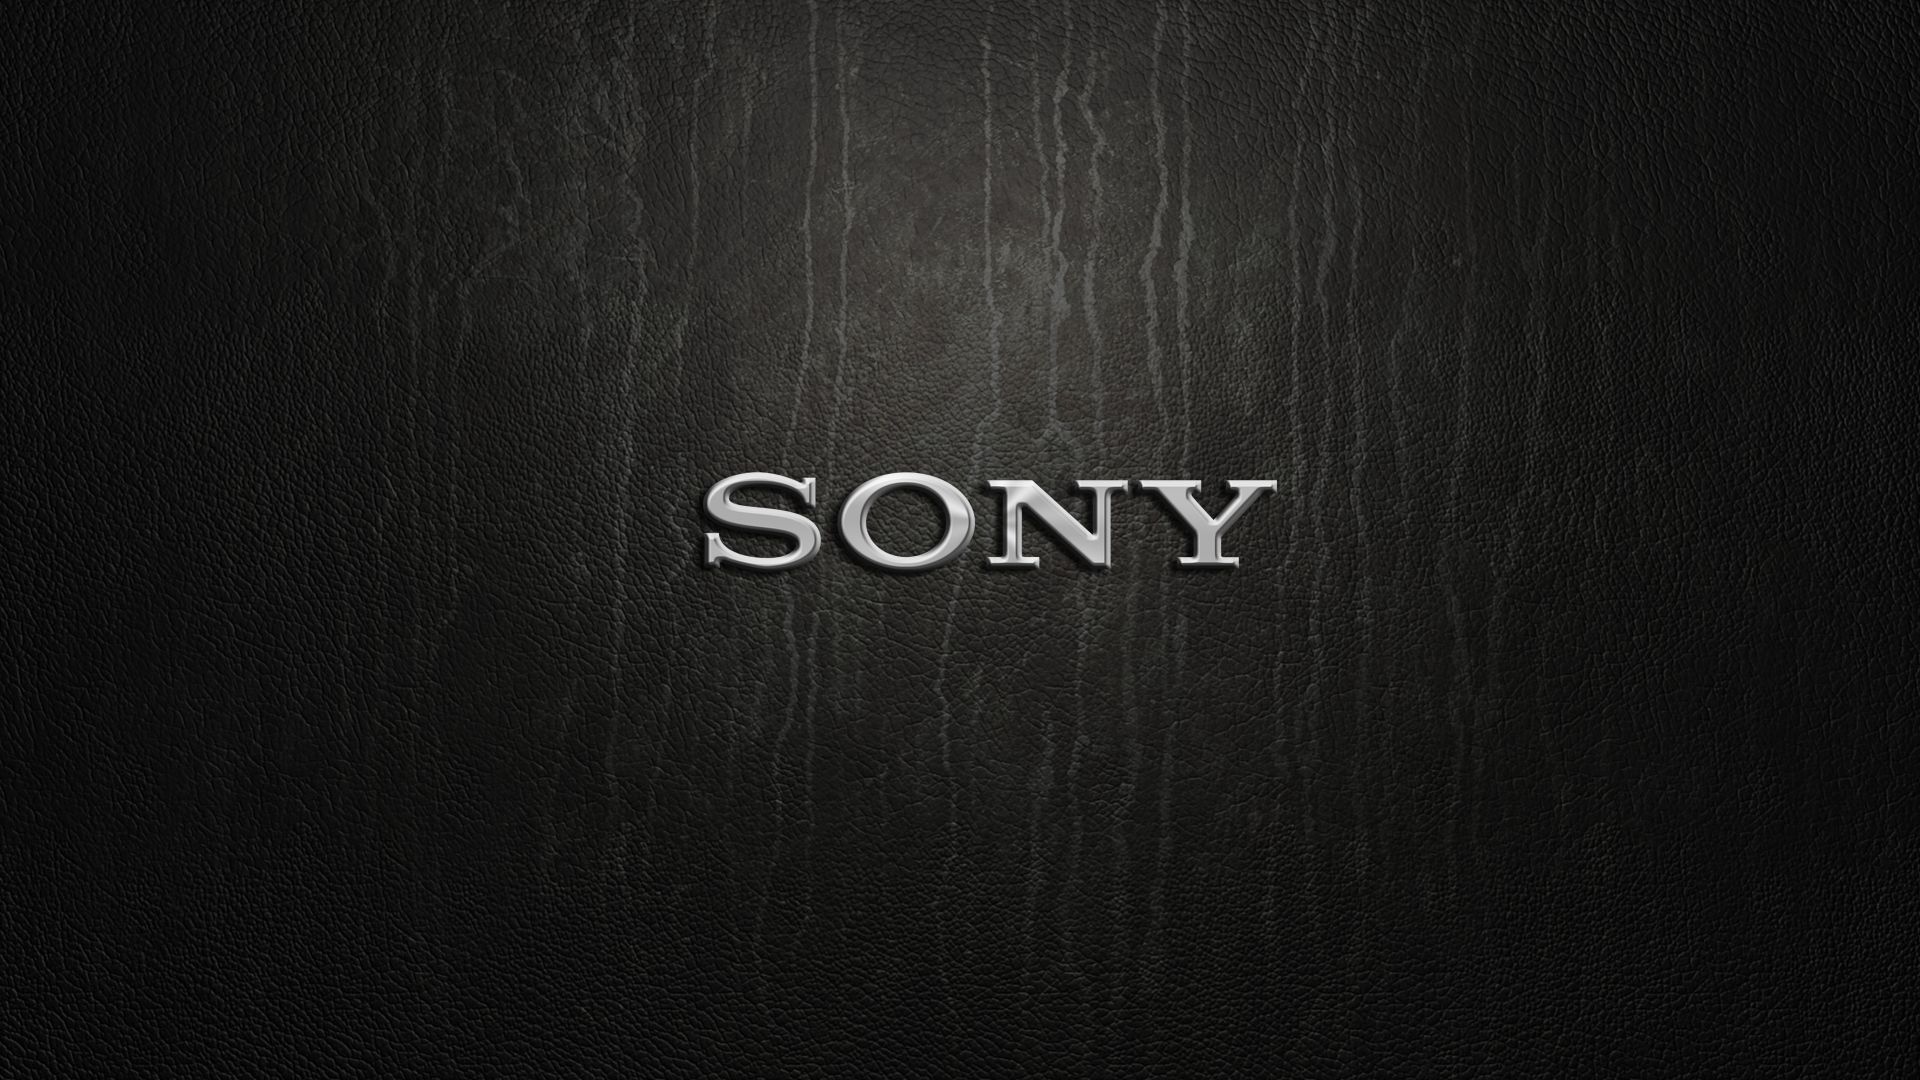 Nieuwe onthulling van een Sony audioproduct op komst